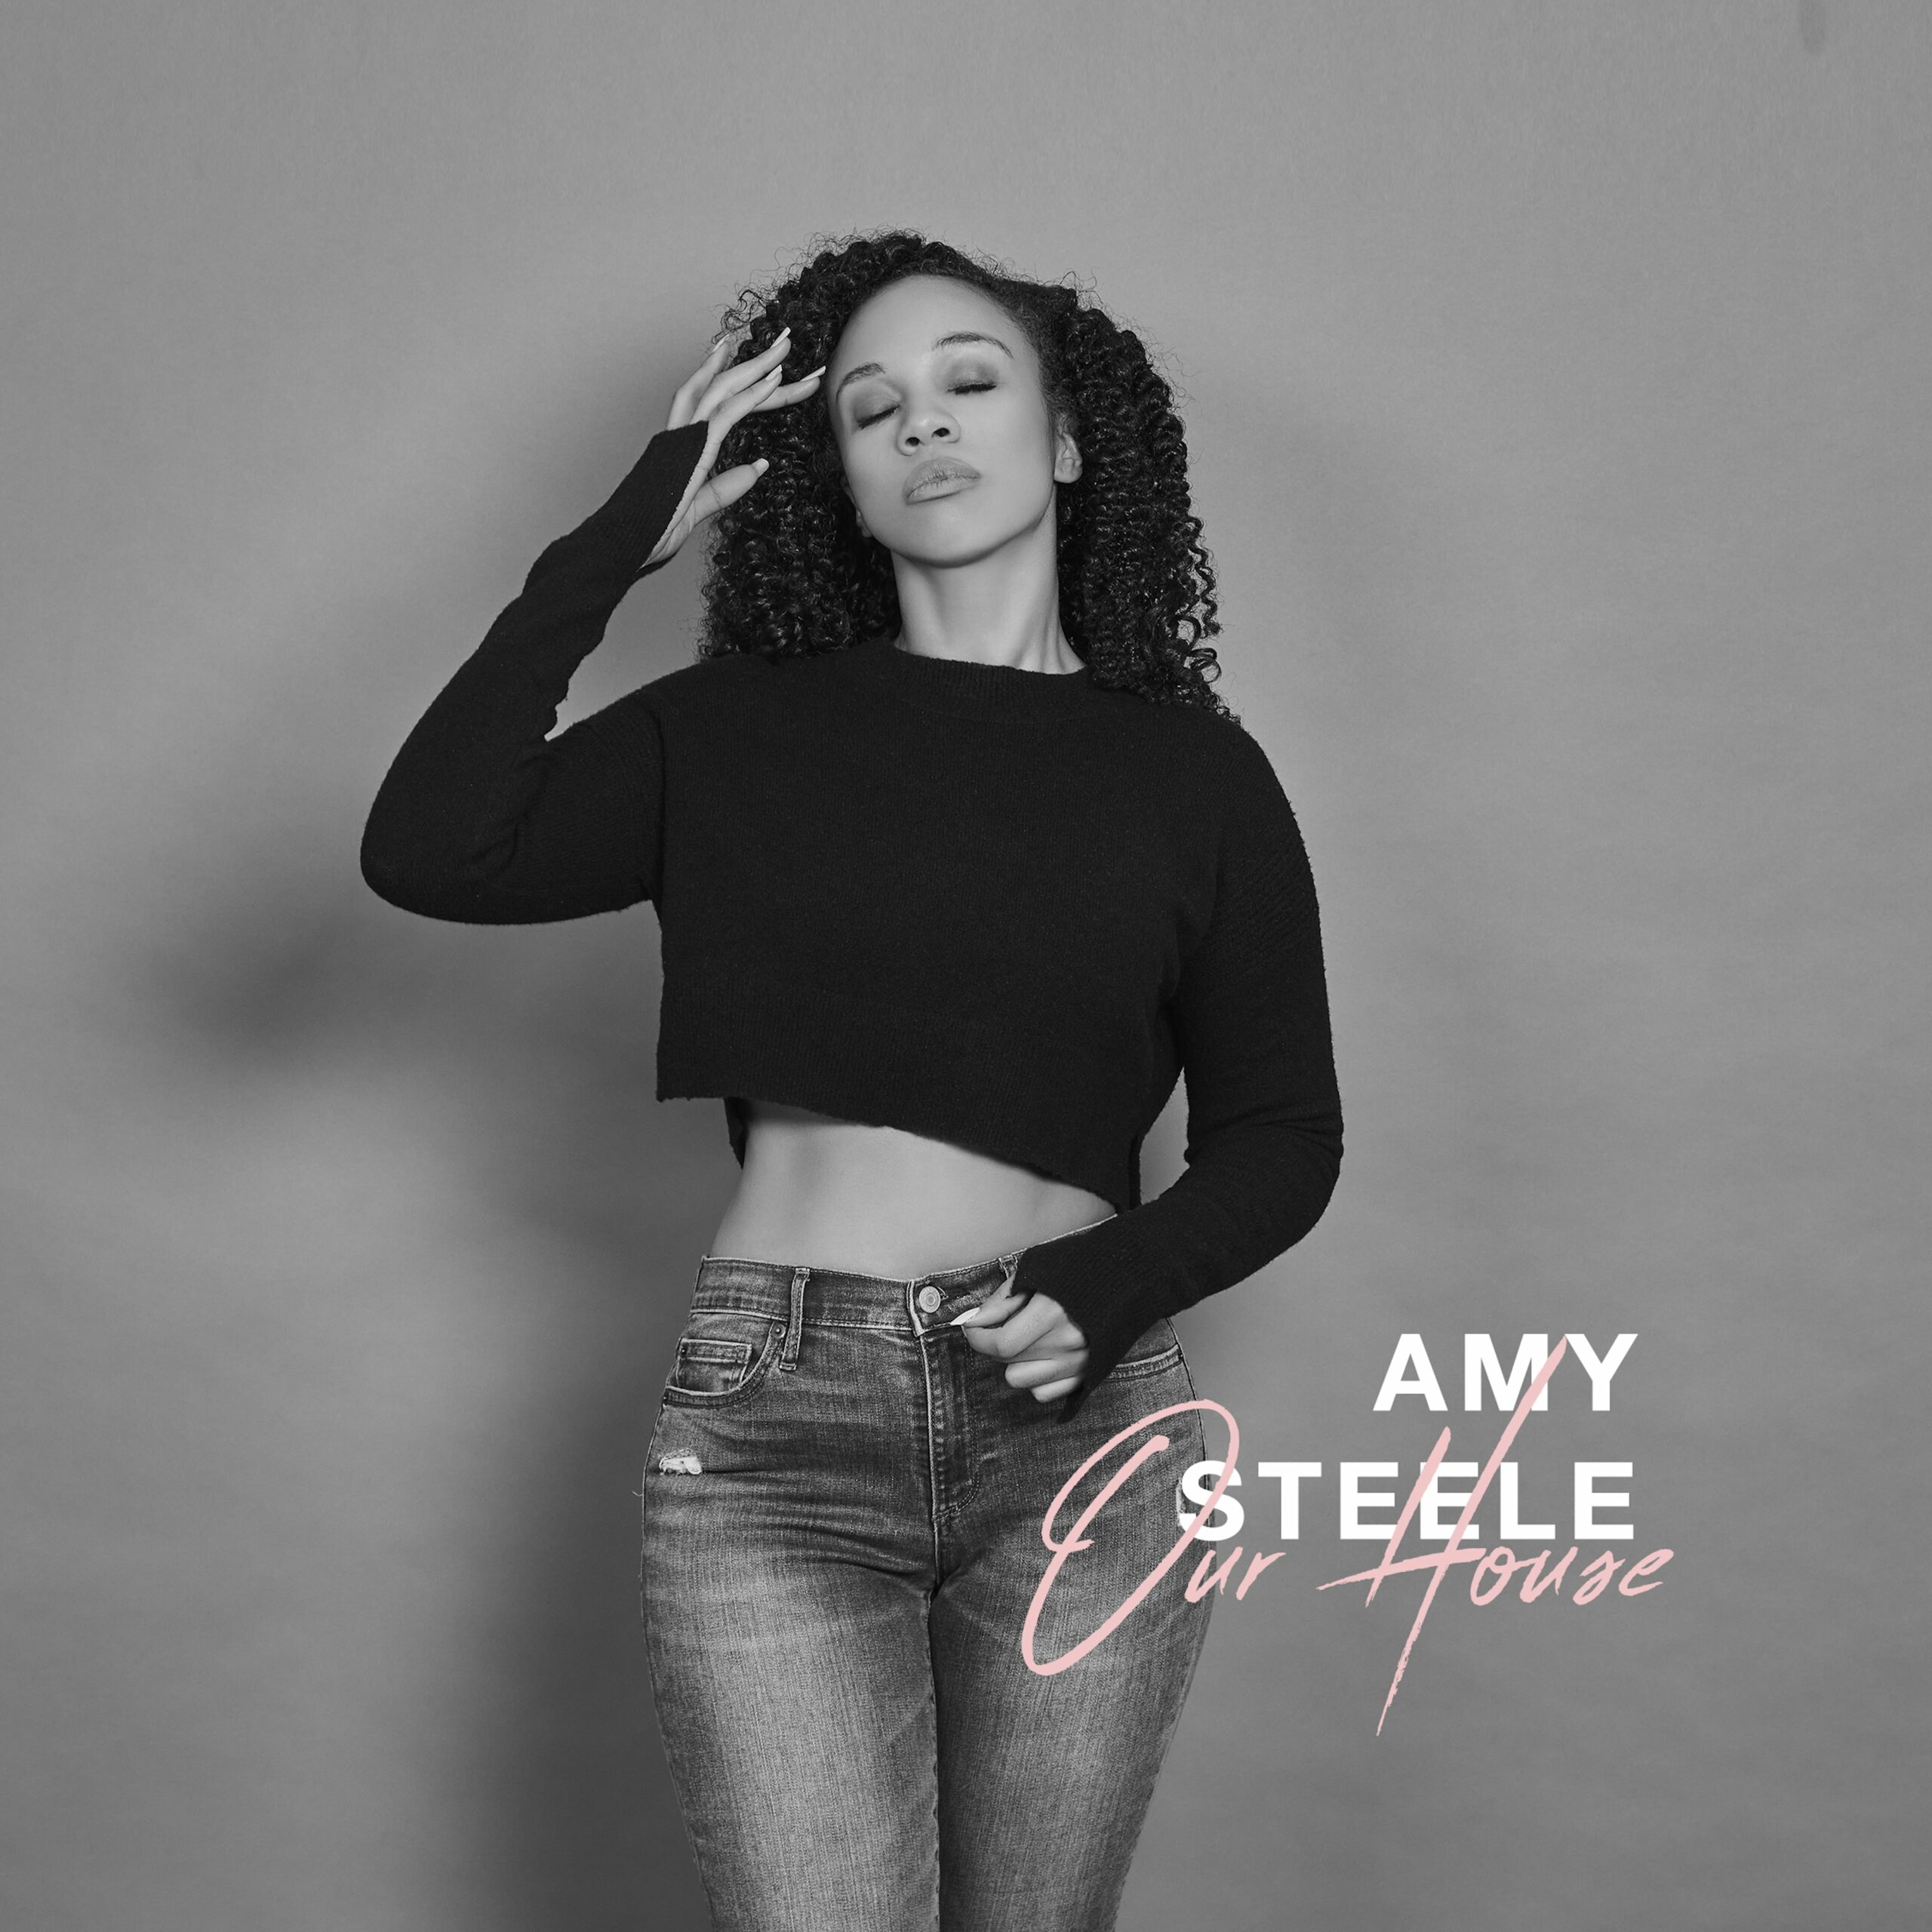 Amy Steele. Amy Steele — long way Home (Rockwell Remix). Our слушать